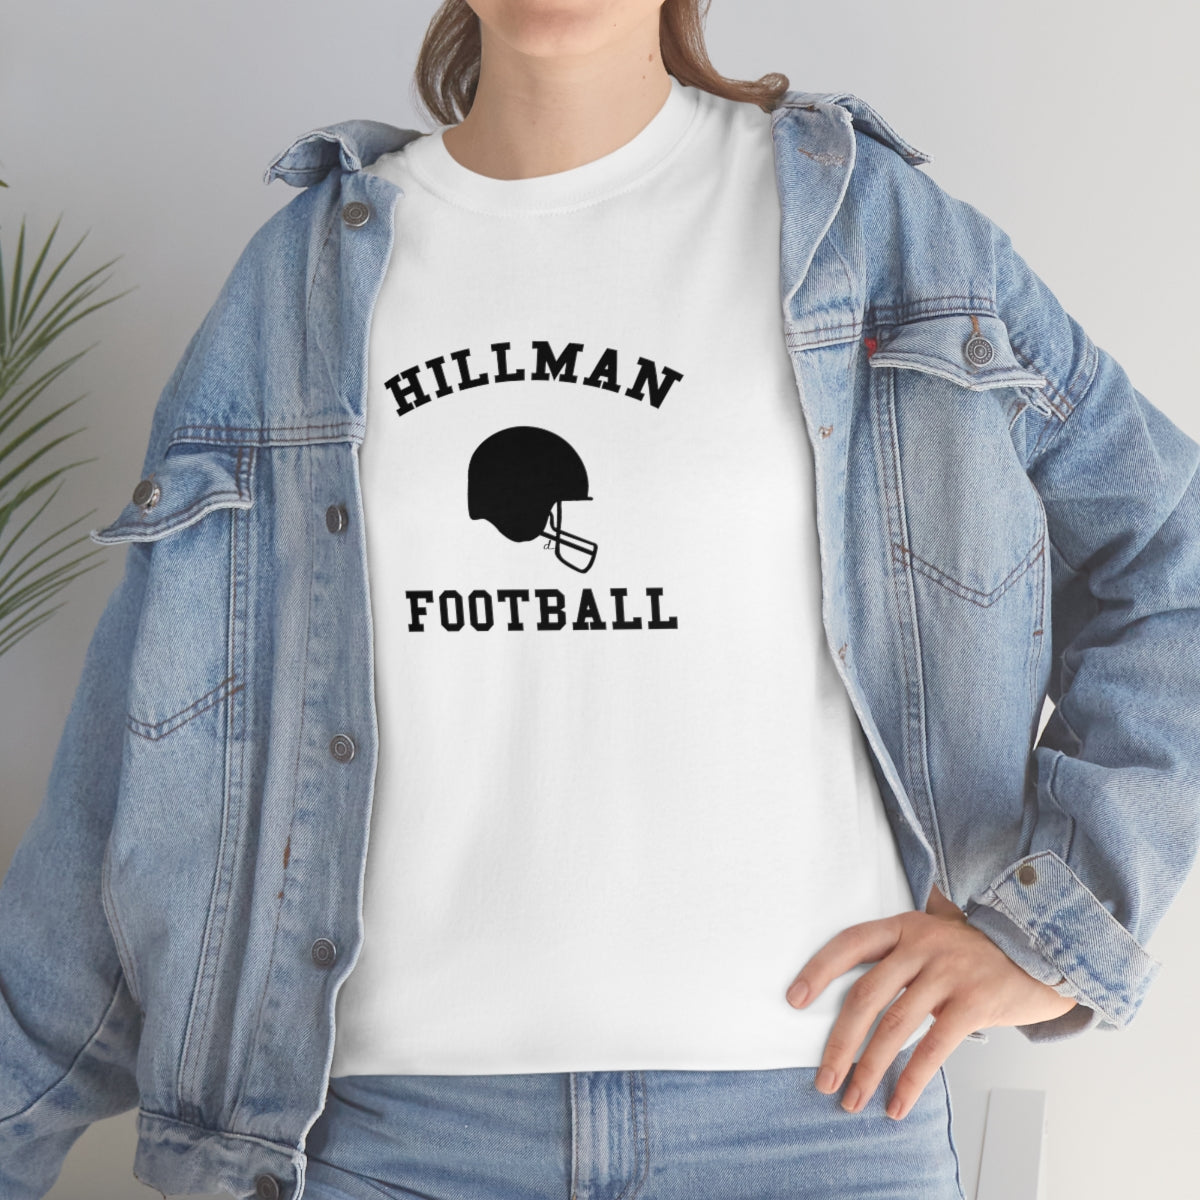 Hillman Football: Black Lettering Unisex Short Sleeve Tee